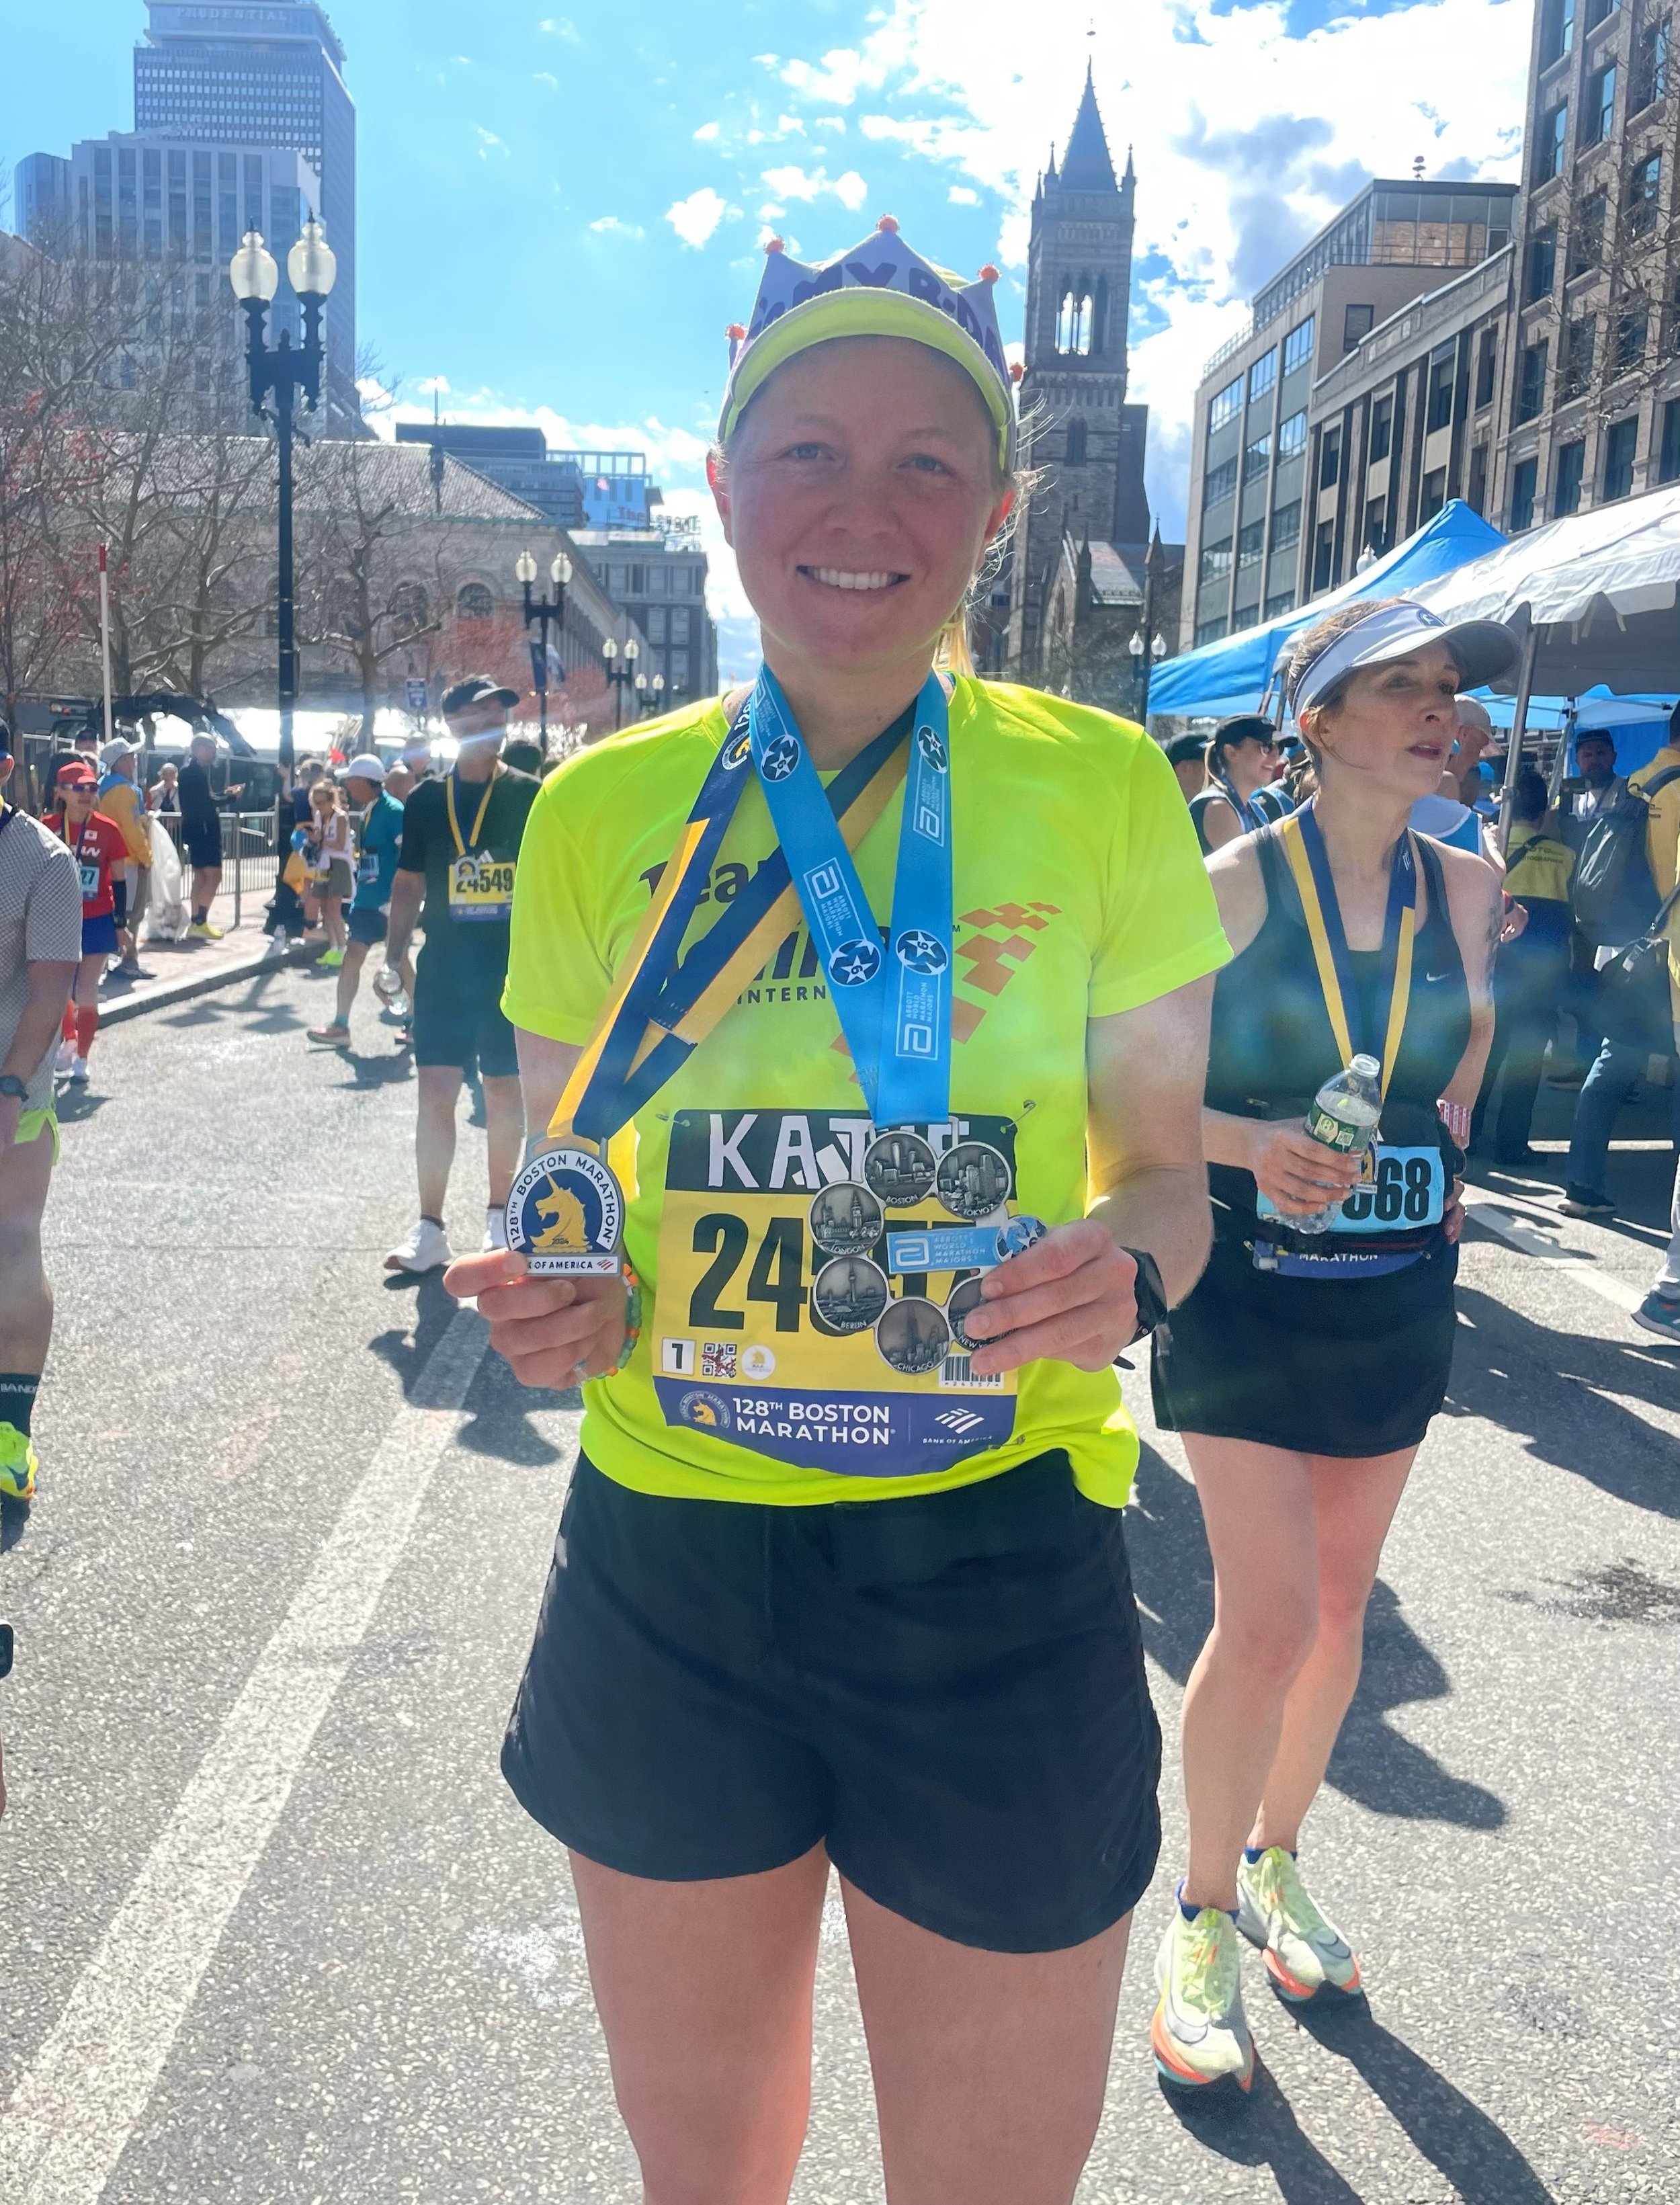  Katie Miller smiling with her birthday crown, her Boston Marathon medal, and her Abbott World Marathon Majors medal 